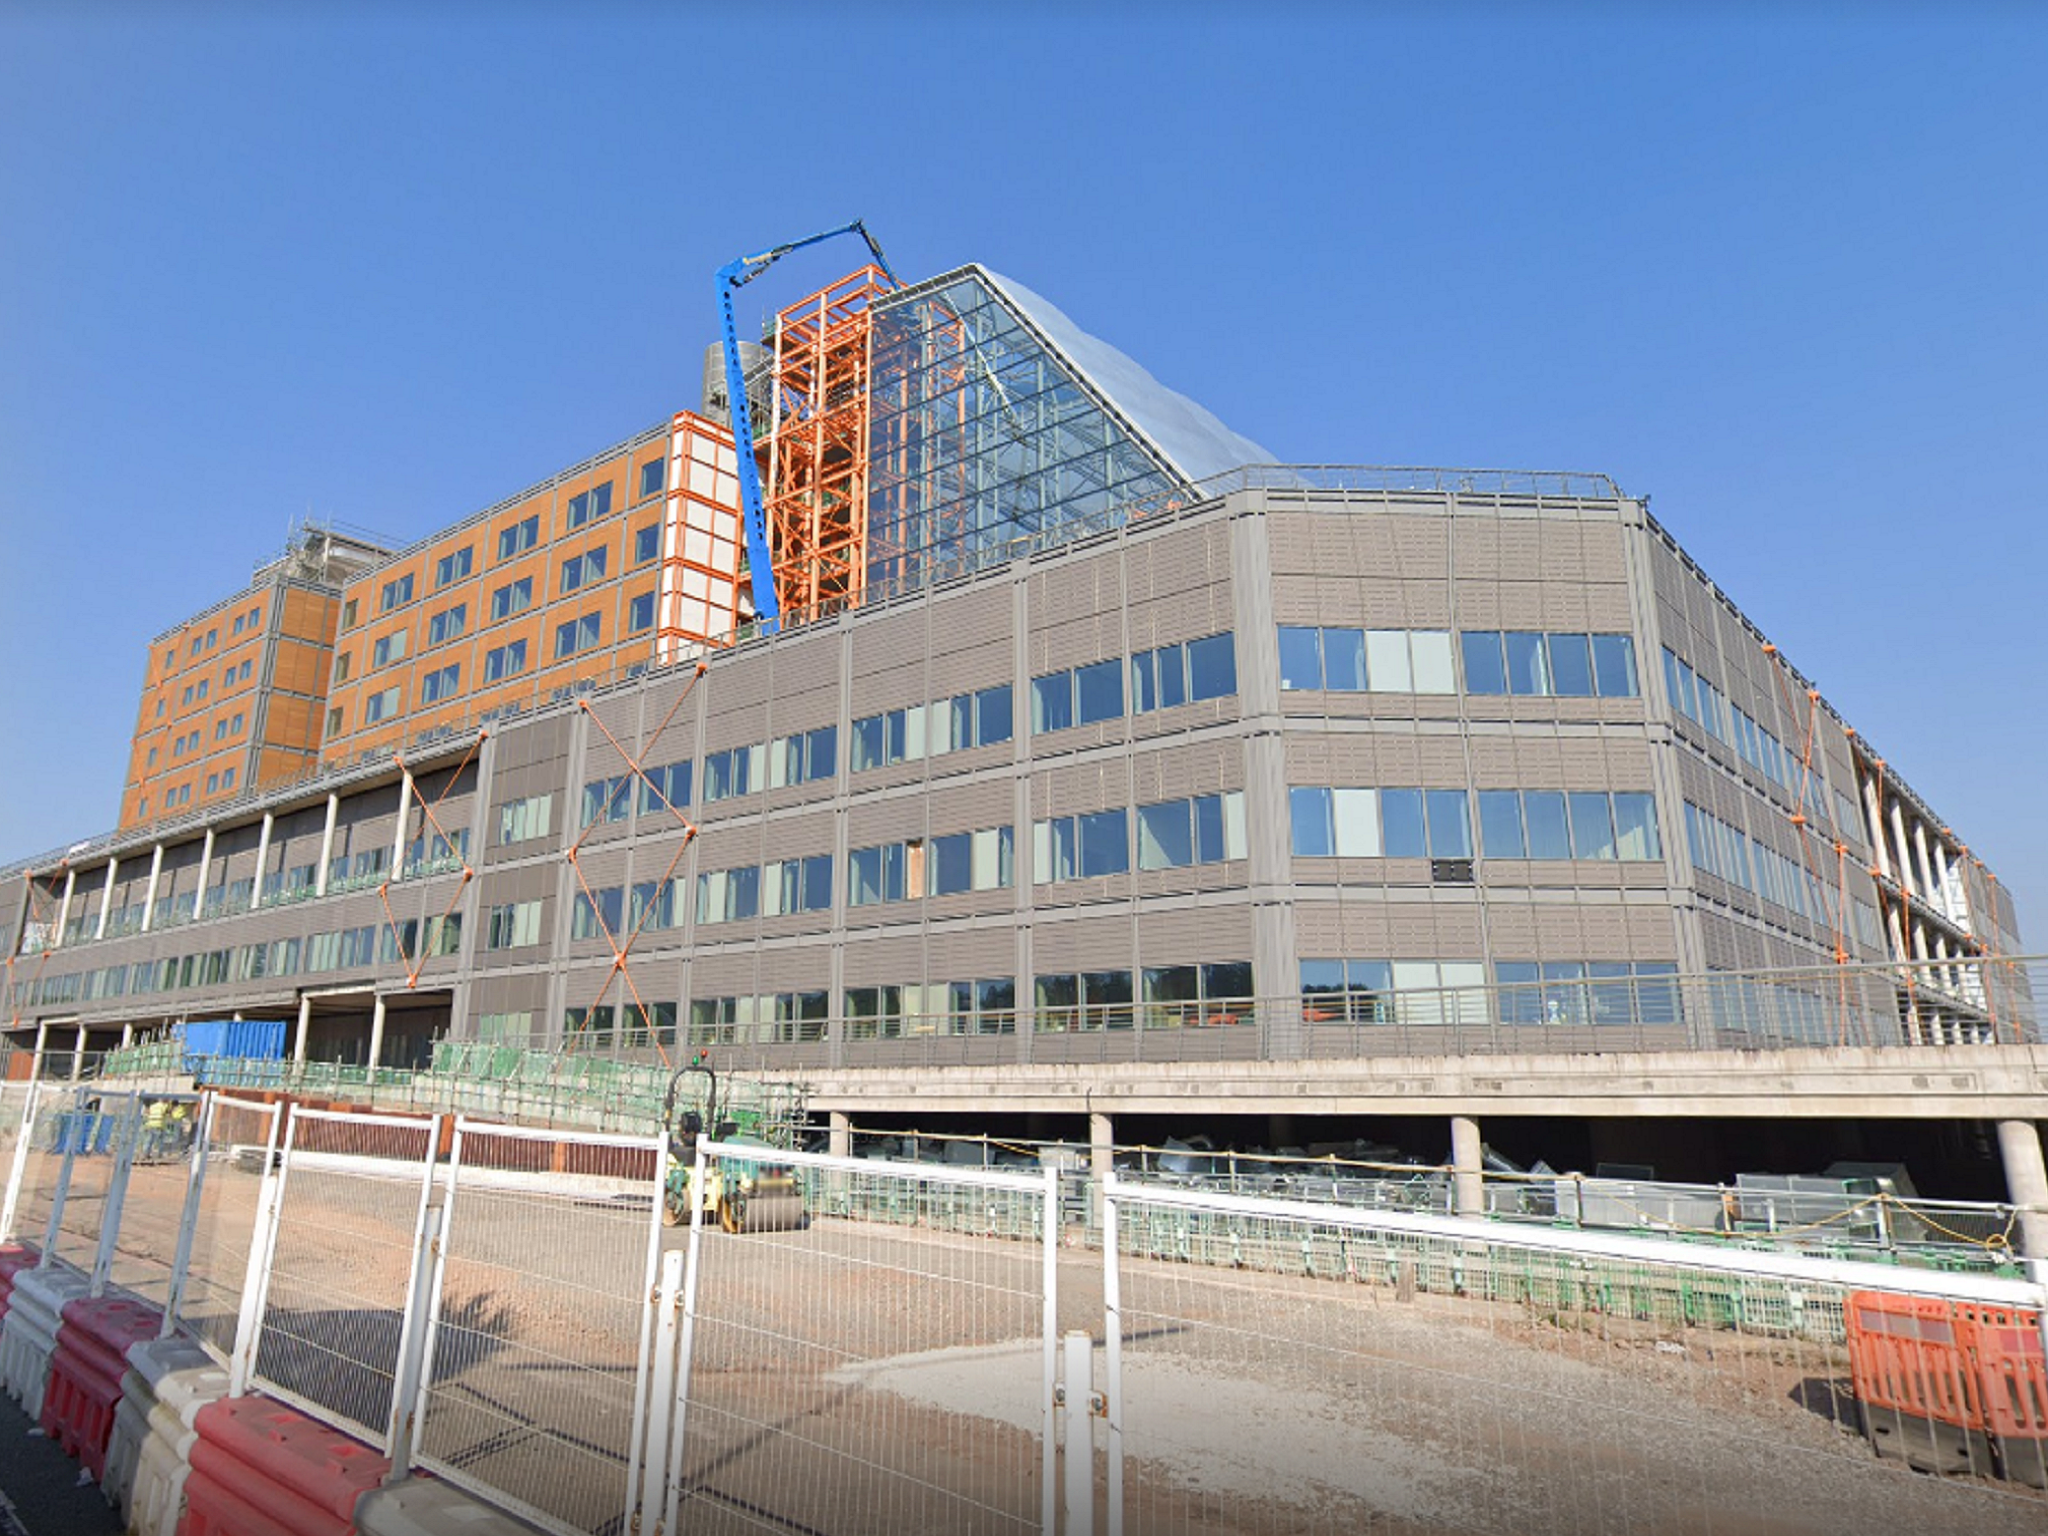 The new Midlands Metropolitan University Hospital has been delayed again until 2023